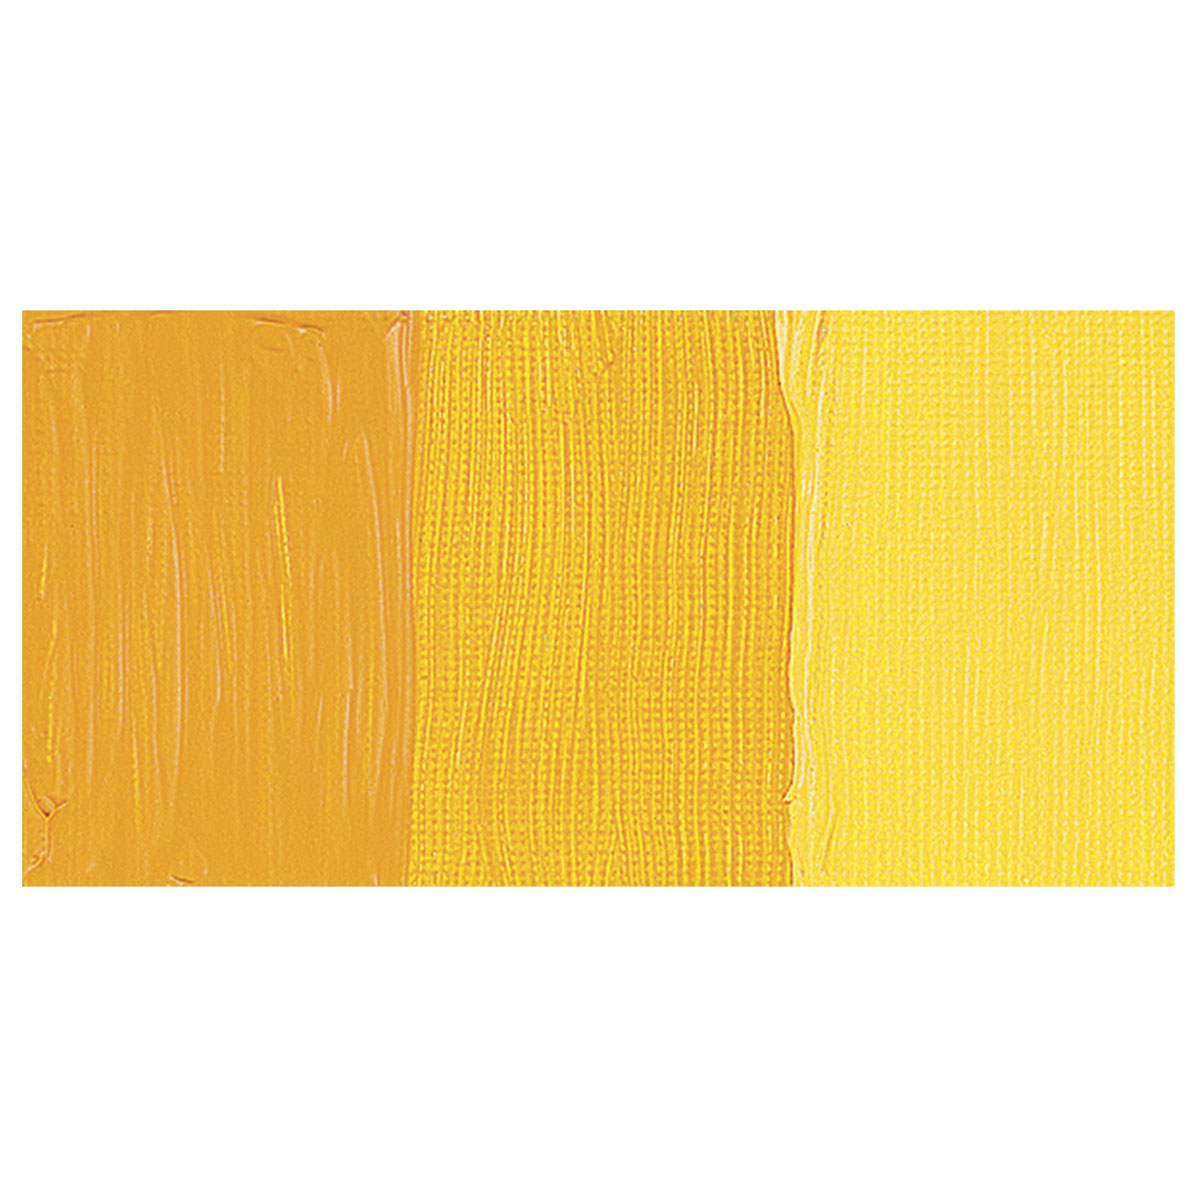 Cadmium Yellow Deep (16oz HB Acrylic)